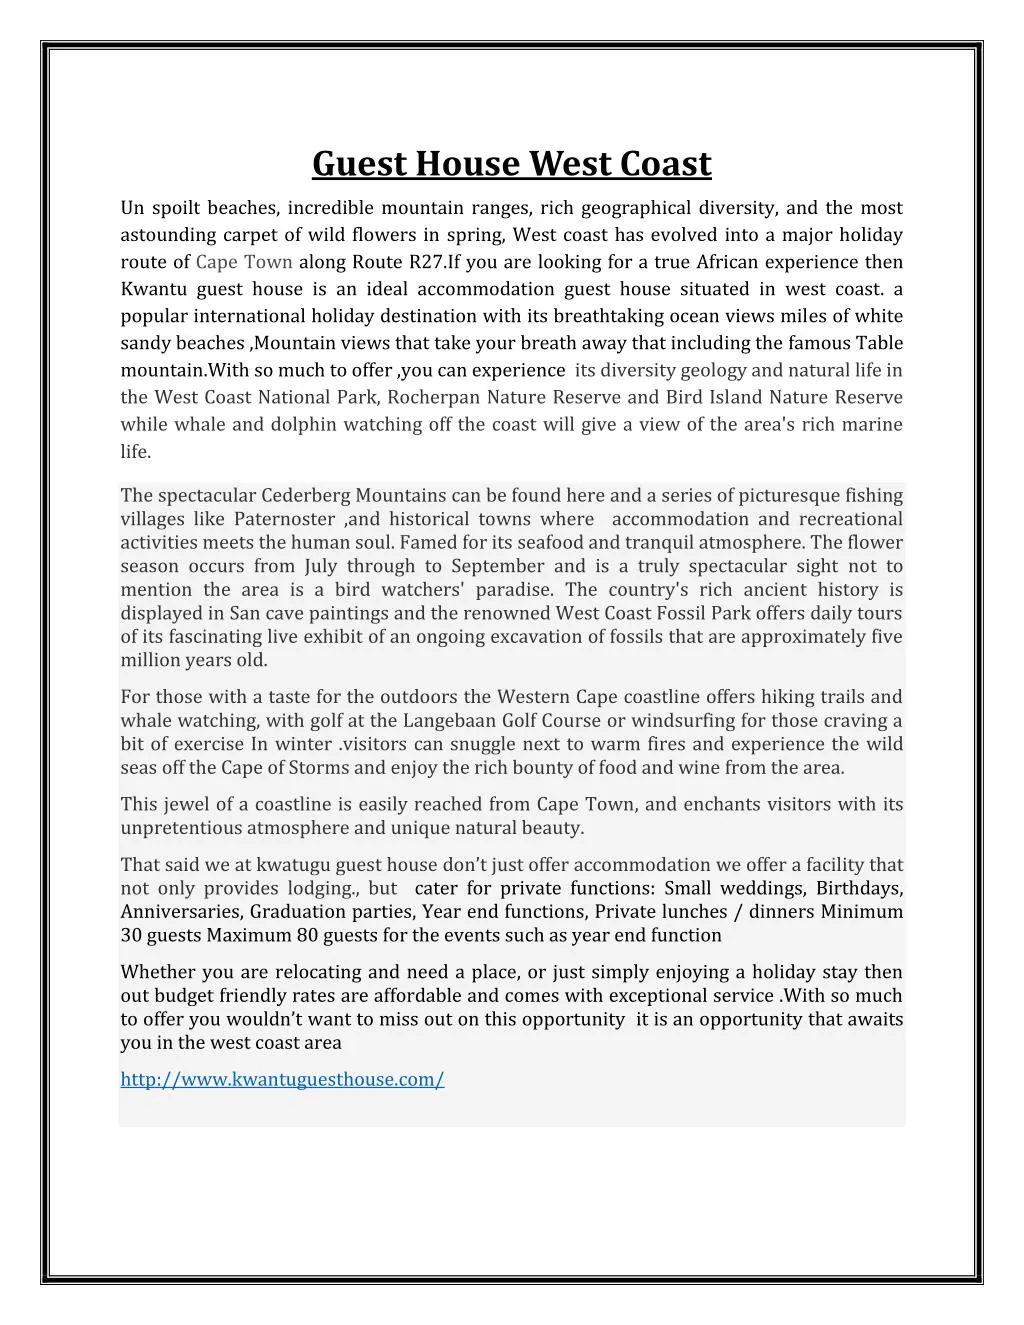 guest house west coast